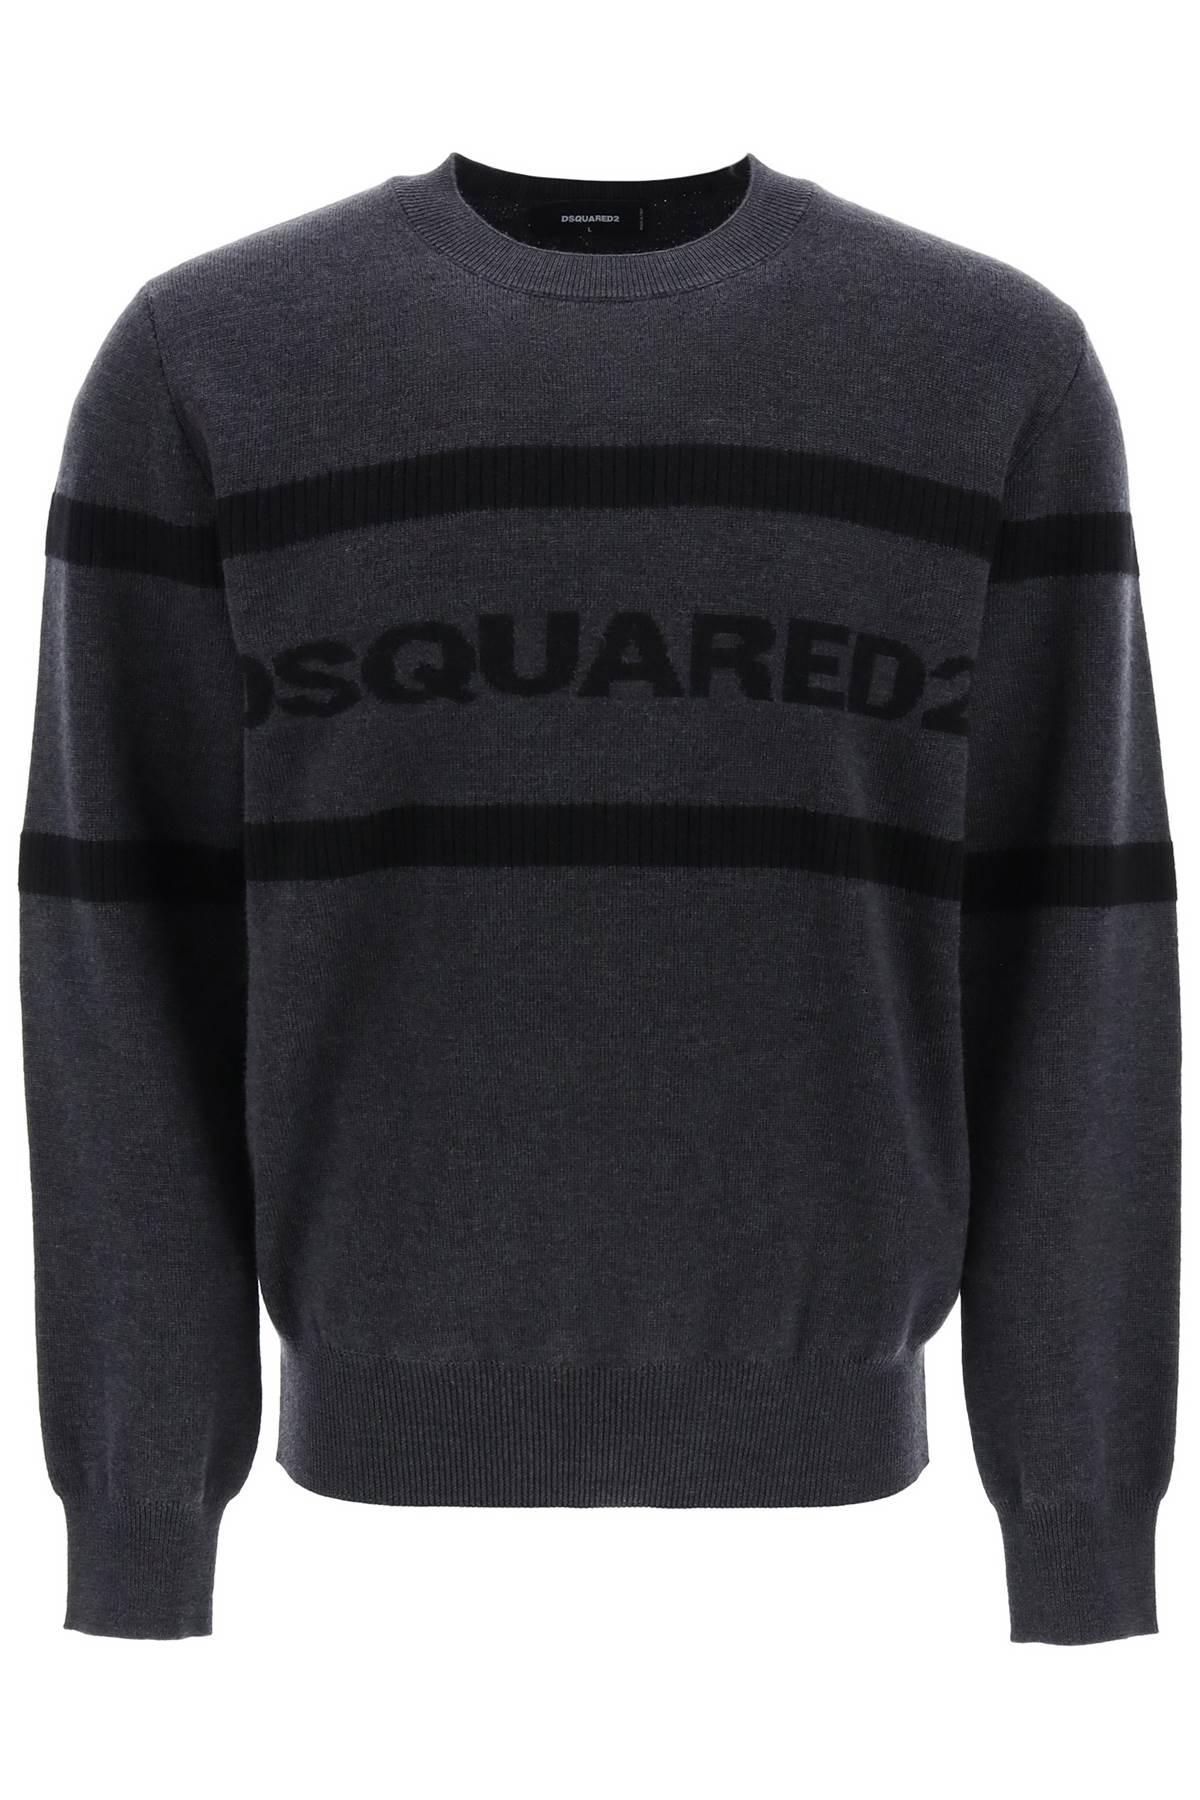 Dsquared2 Jacquard Logo Lettering Sweater - 1